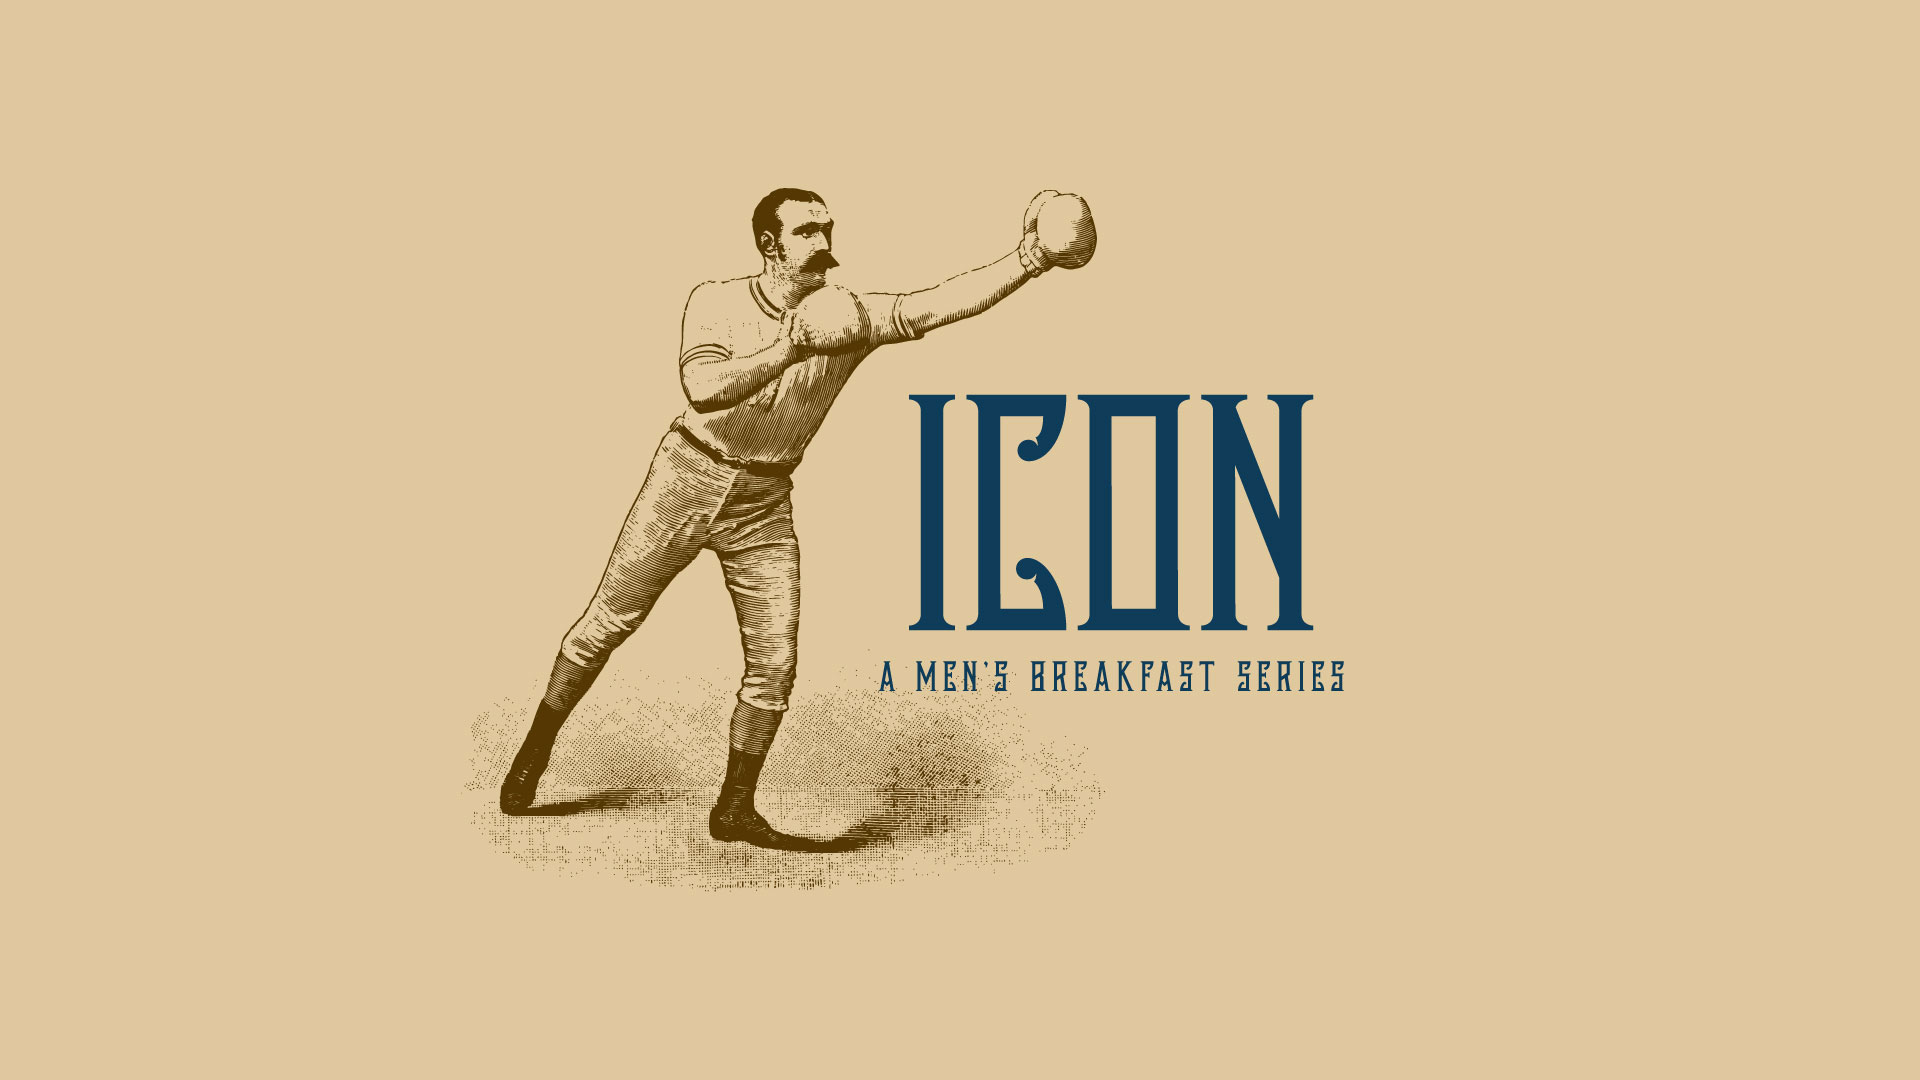 Series: Men's Breakfast Series: Icon